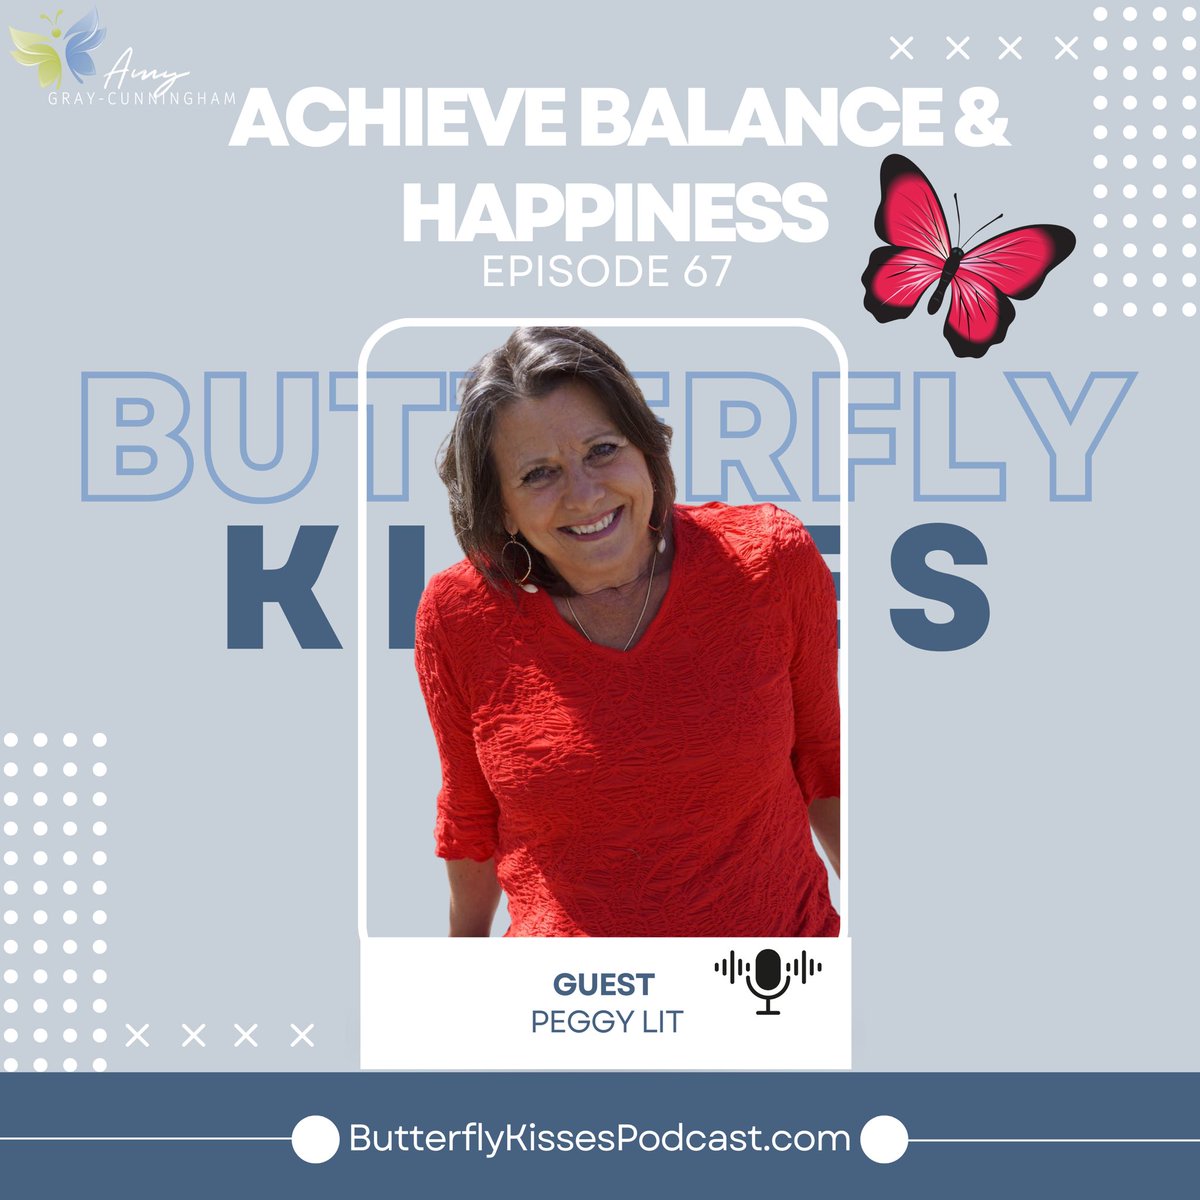 #ButterflyKissesPodcast, Eps 67
Peggy Lit: Achieve Balance and Happiness
Available to listen on all podcast apps, or here:

Podcast bit.ly/ButterflyKisse…
YouTube youtu.be/4AtdyB29vv4

#amygraycunningham #PeggyLit #oneness #Happiness
#balance #awakenedheart